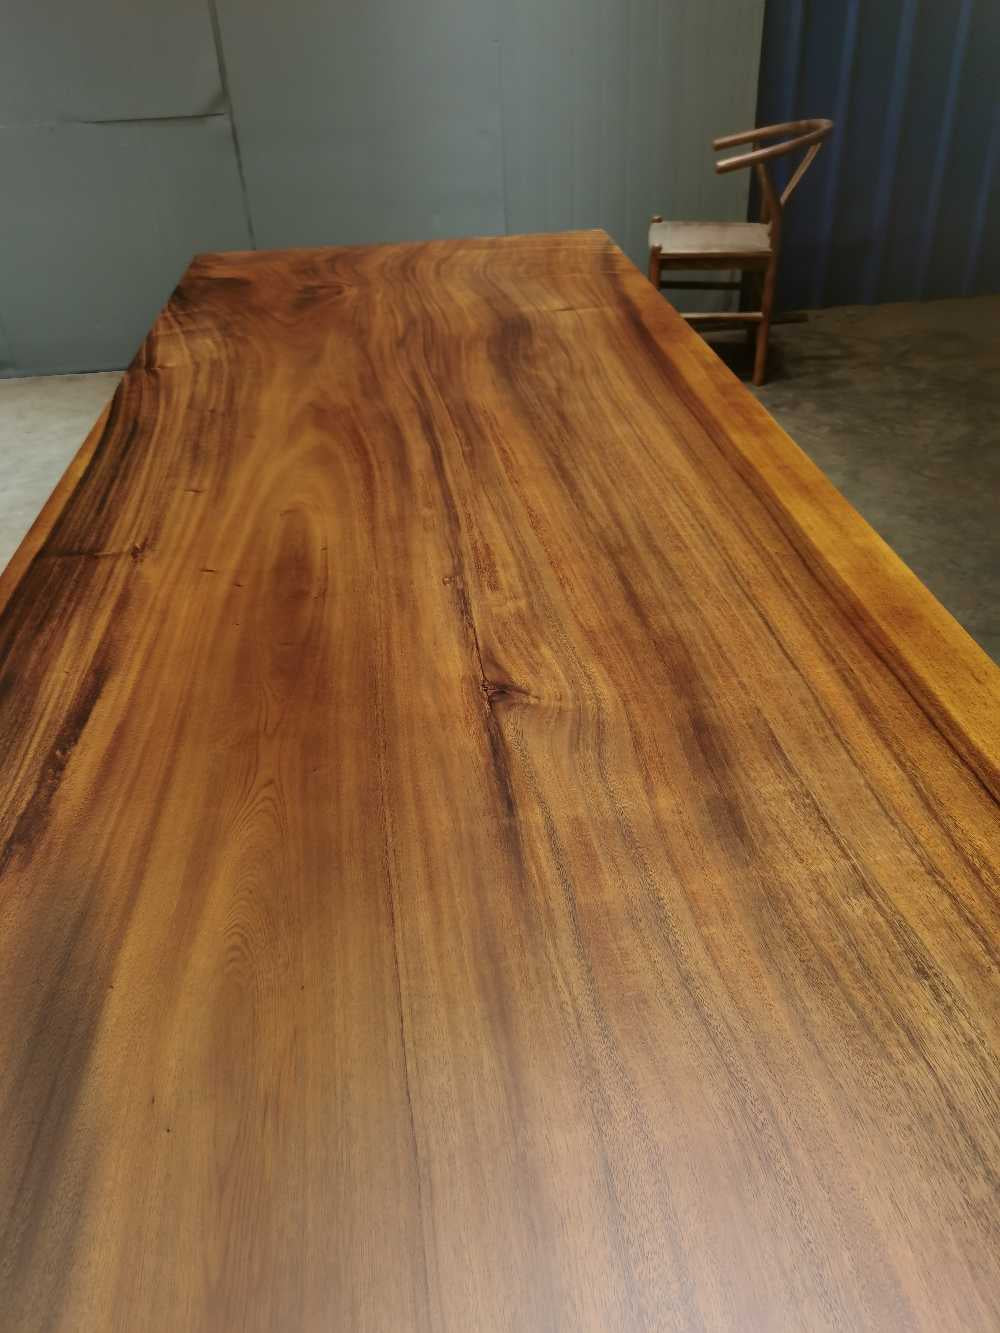 wood slab table legs, Congo walnut wood slab table top